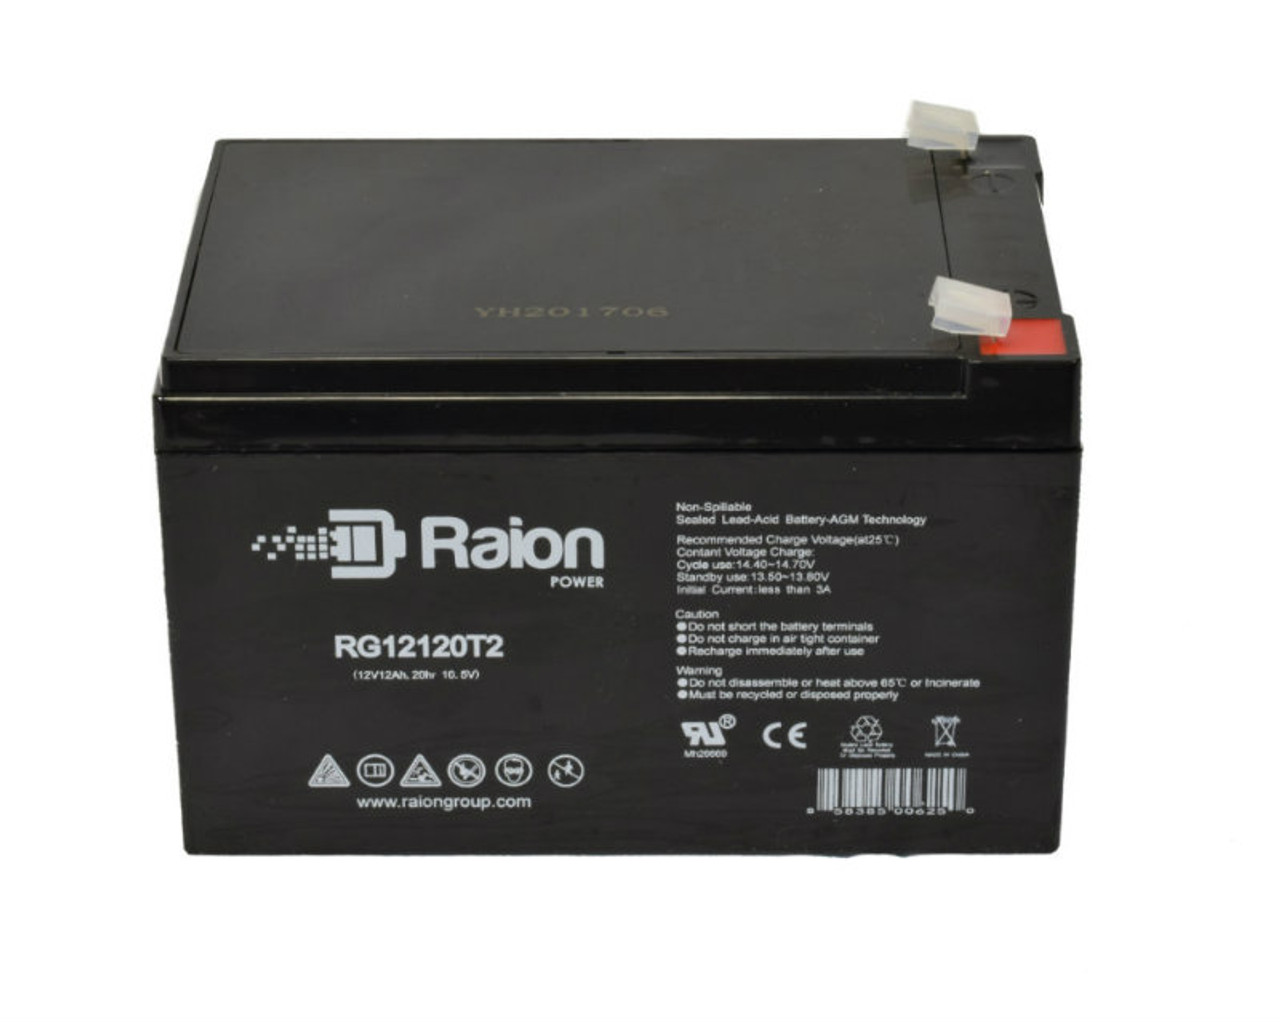 Raion Power RG12120T2 SLA Battery for Embassy Crown 12CE12